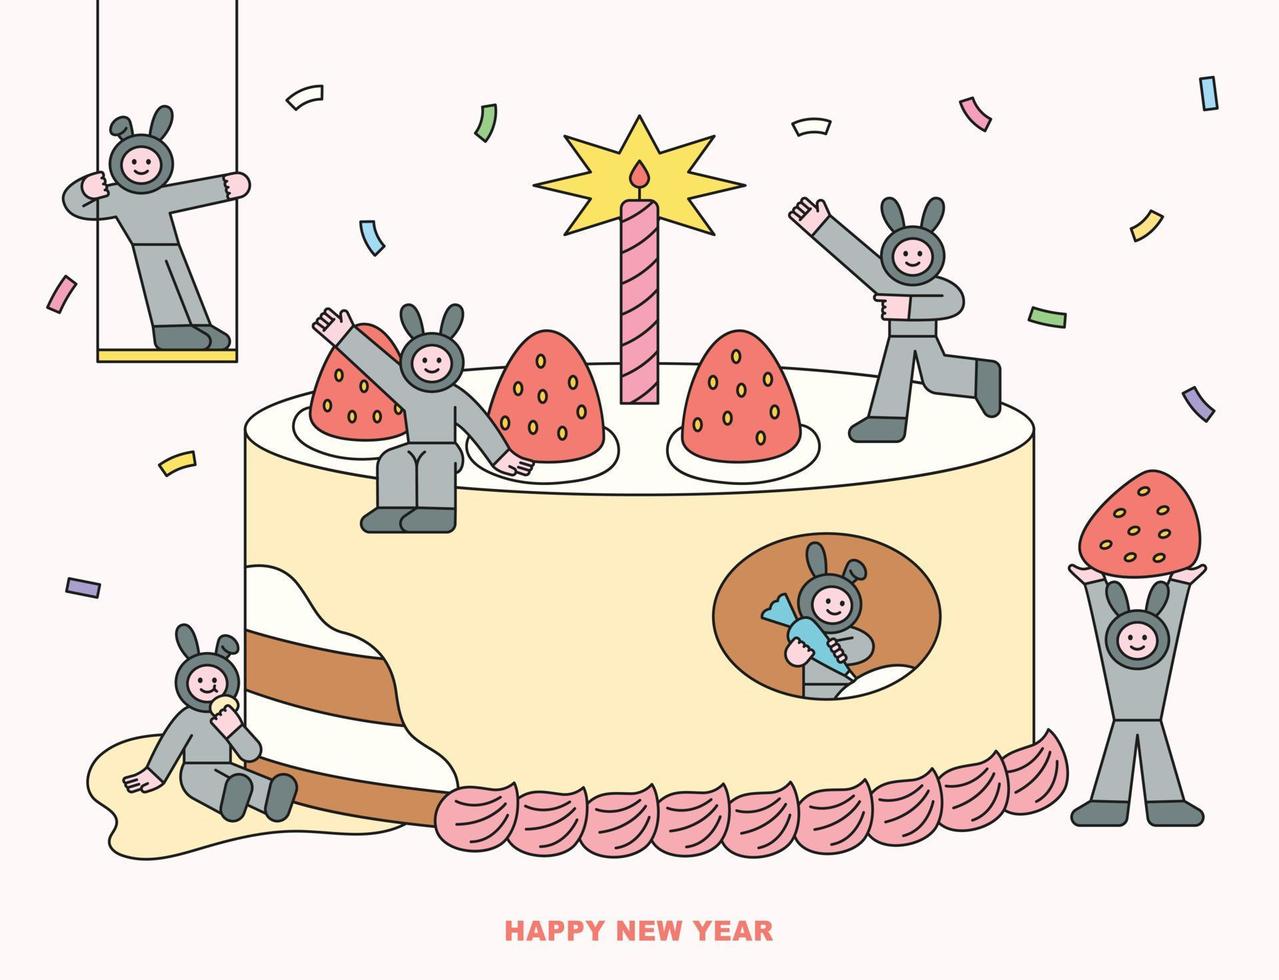 Black rabbits, the symbol of 2023, are making a huge celebration cake. flat design style vector illustration.